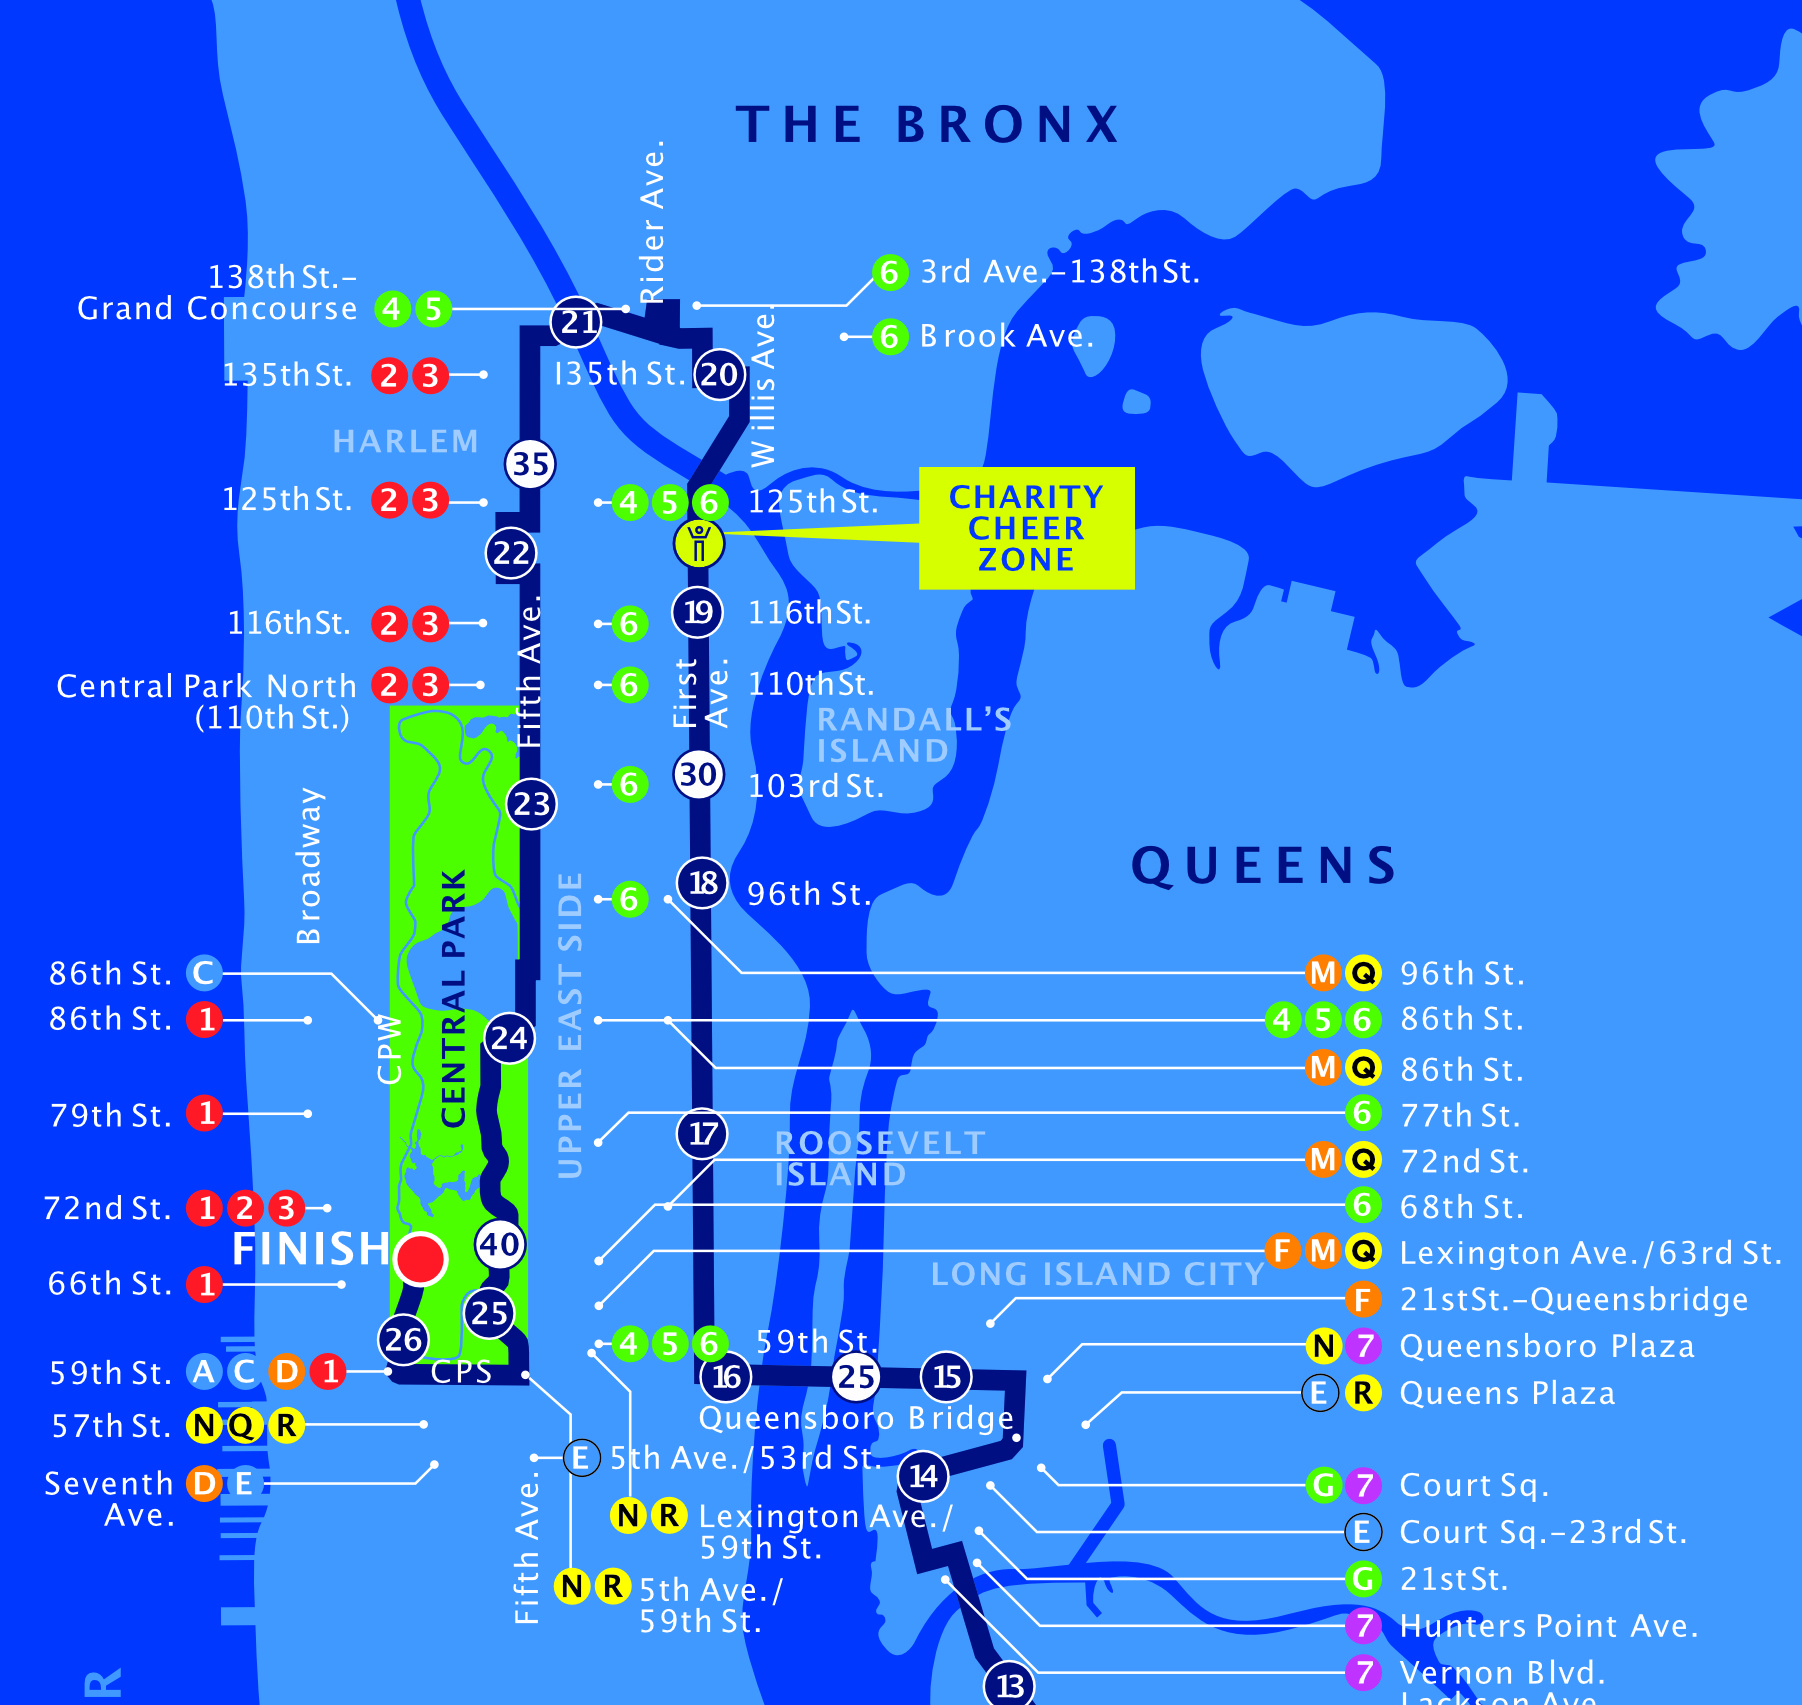 nyc marathon course map 2019 Tcs New York City Marathon Central Park nyc marathon course map